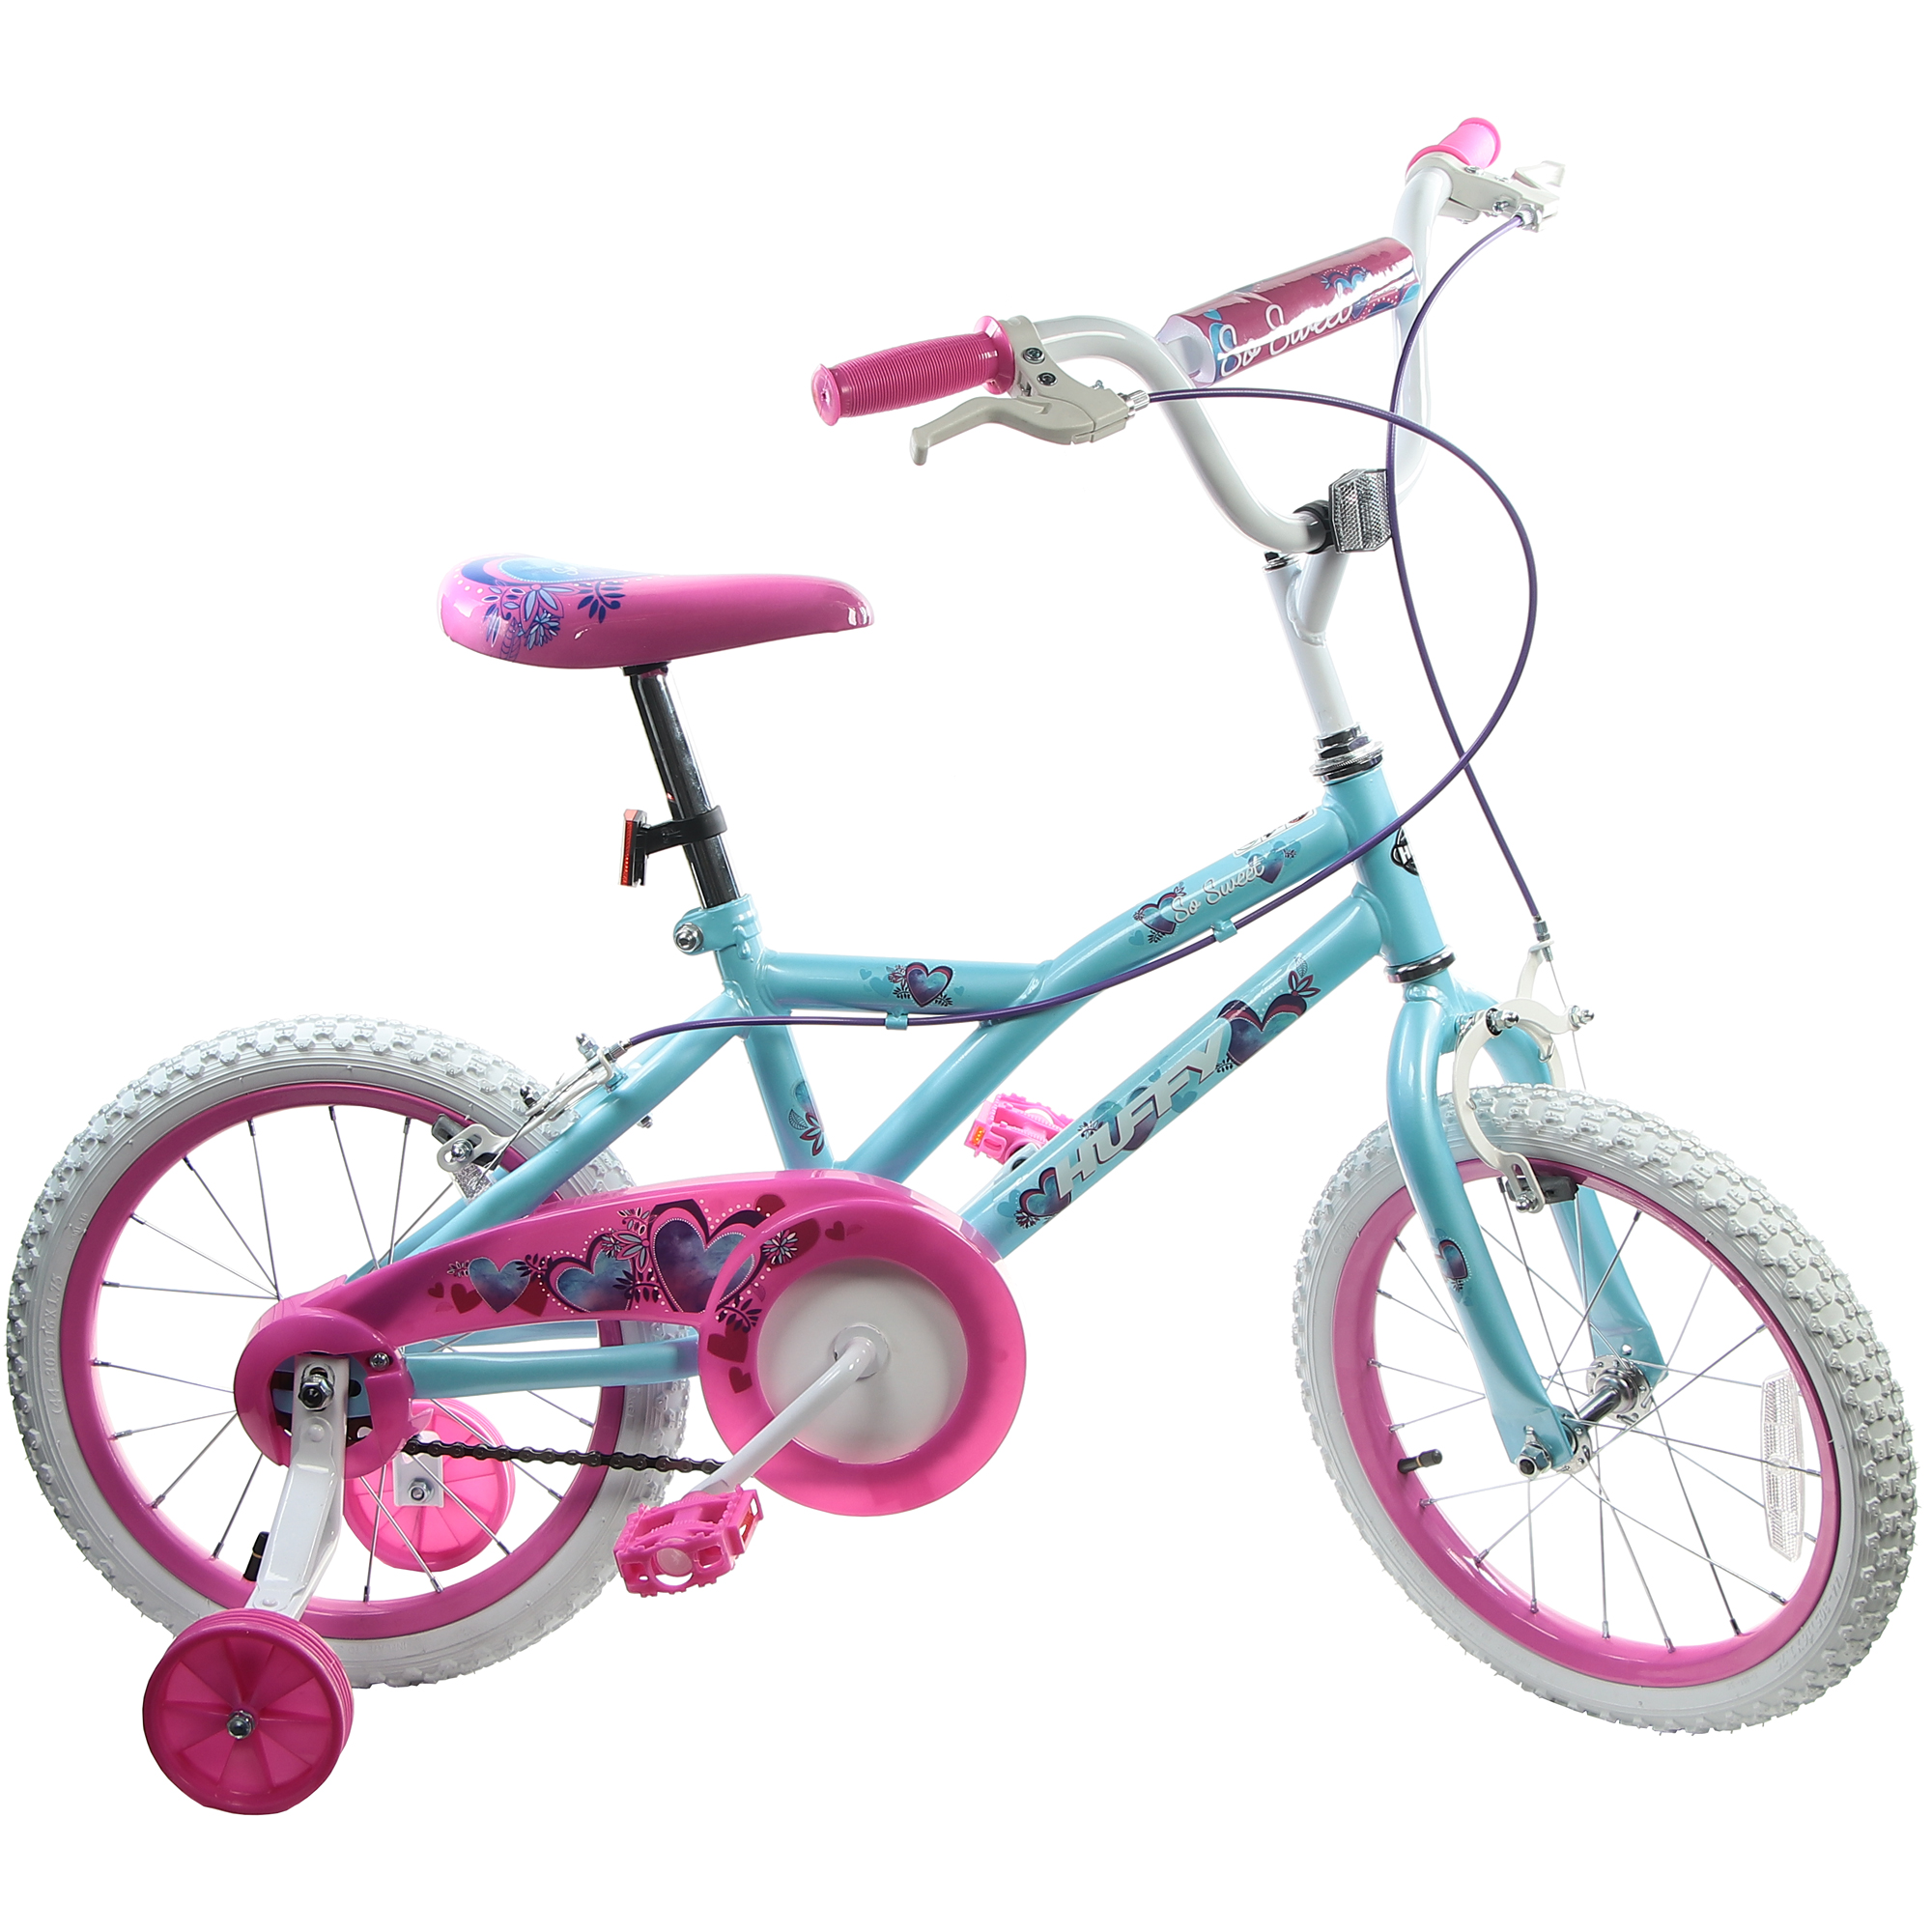 Велосипед детский Huffy So sweet, 16, для девочек велосипед детский huffy delirium 16 для мальчиков